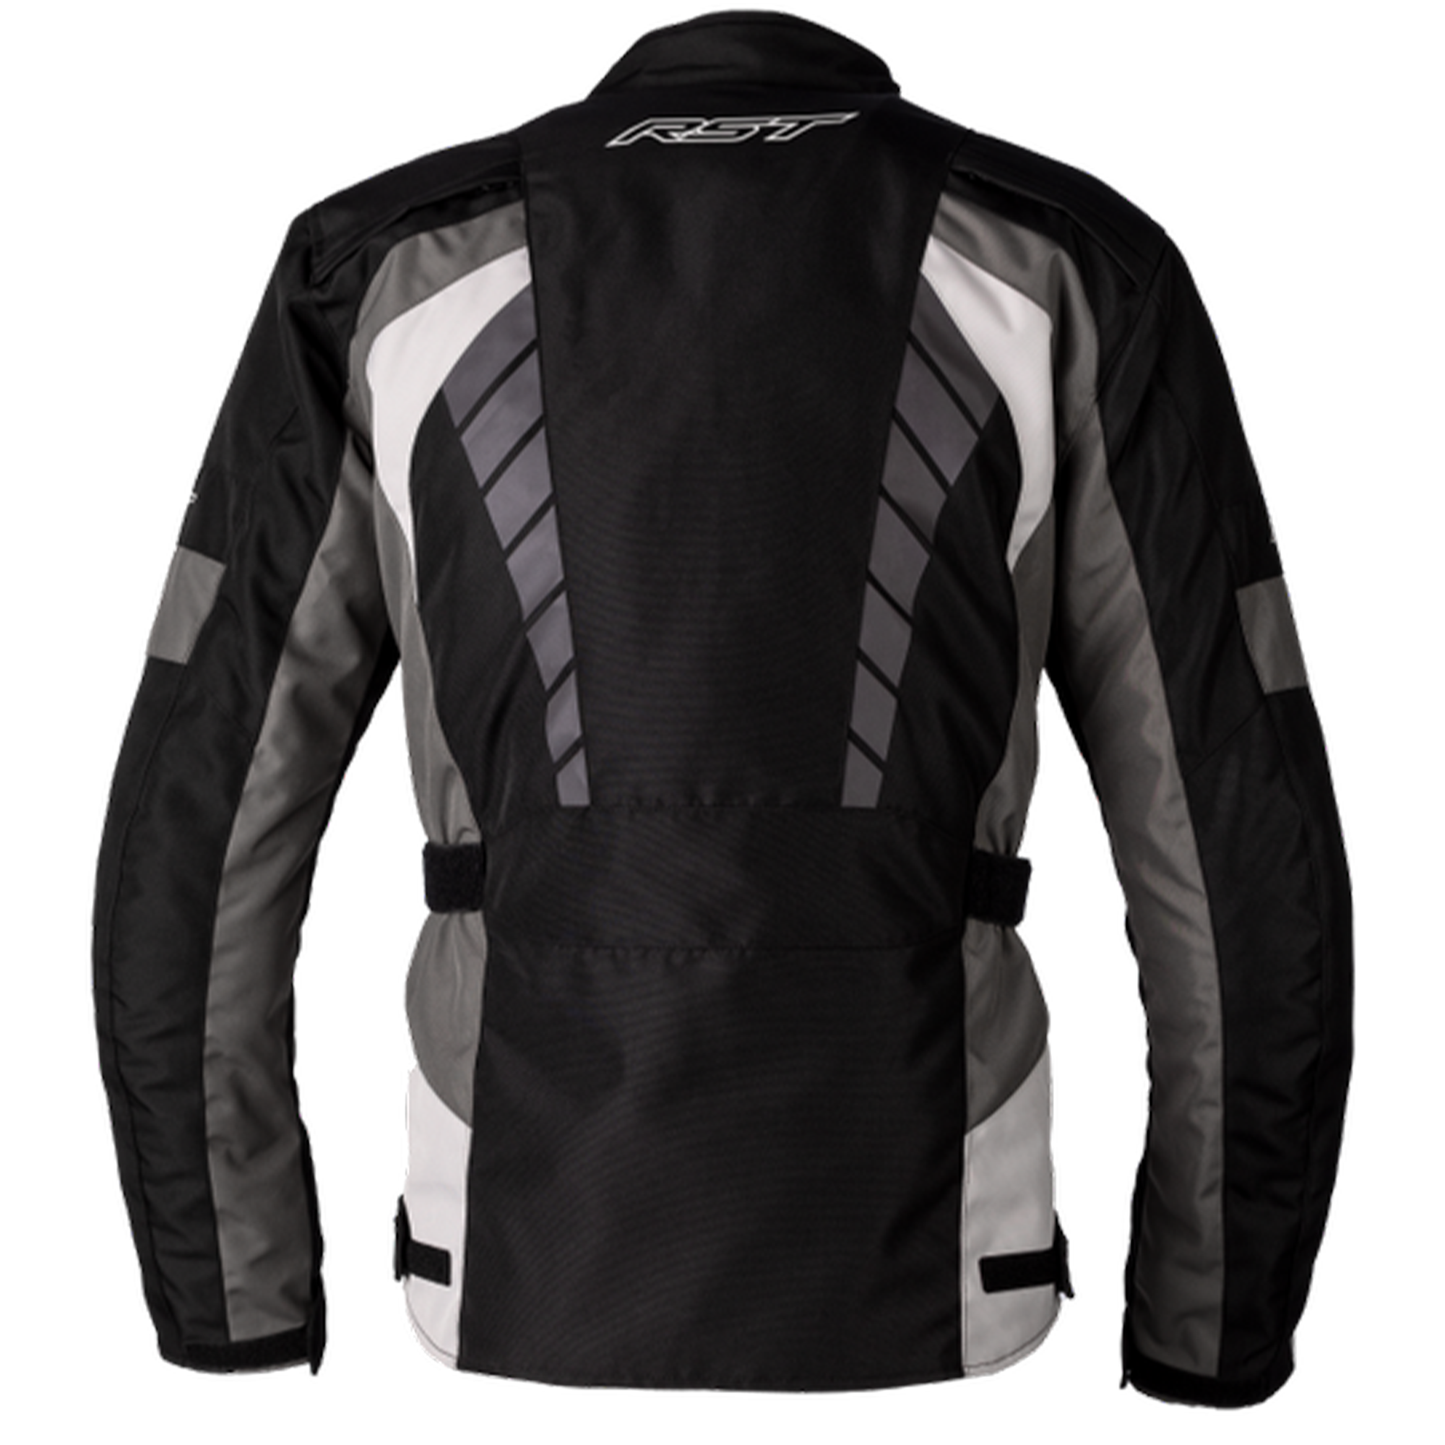 RST Alpha 5 Textile Jacket - Black/Grey (3028)